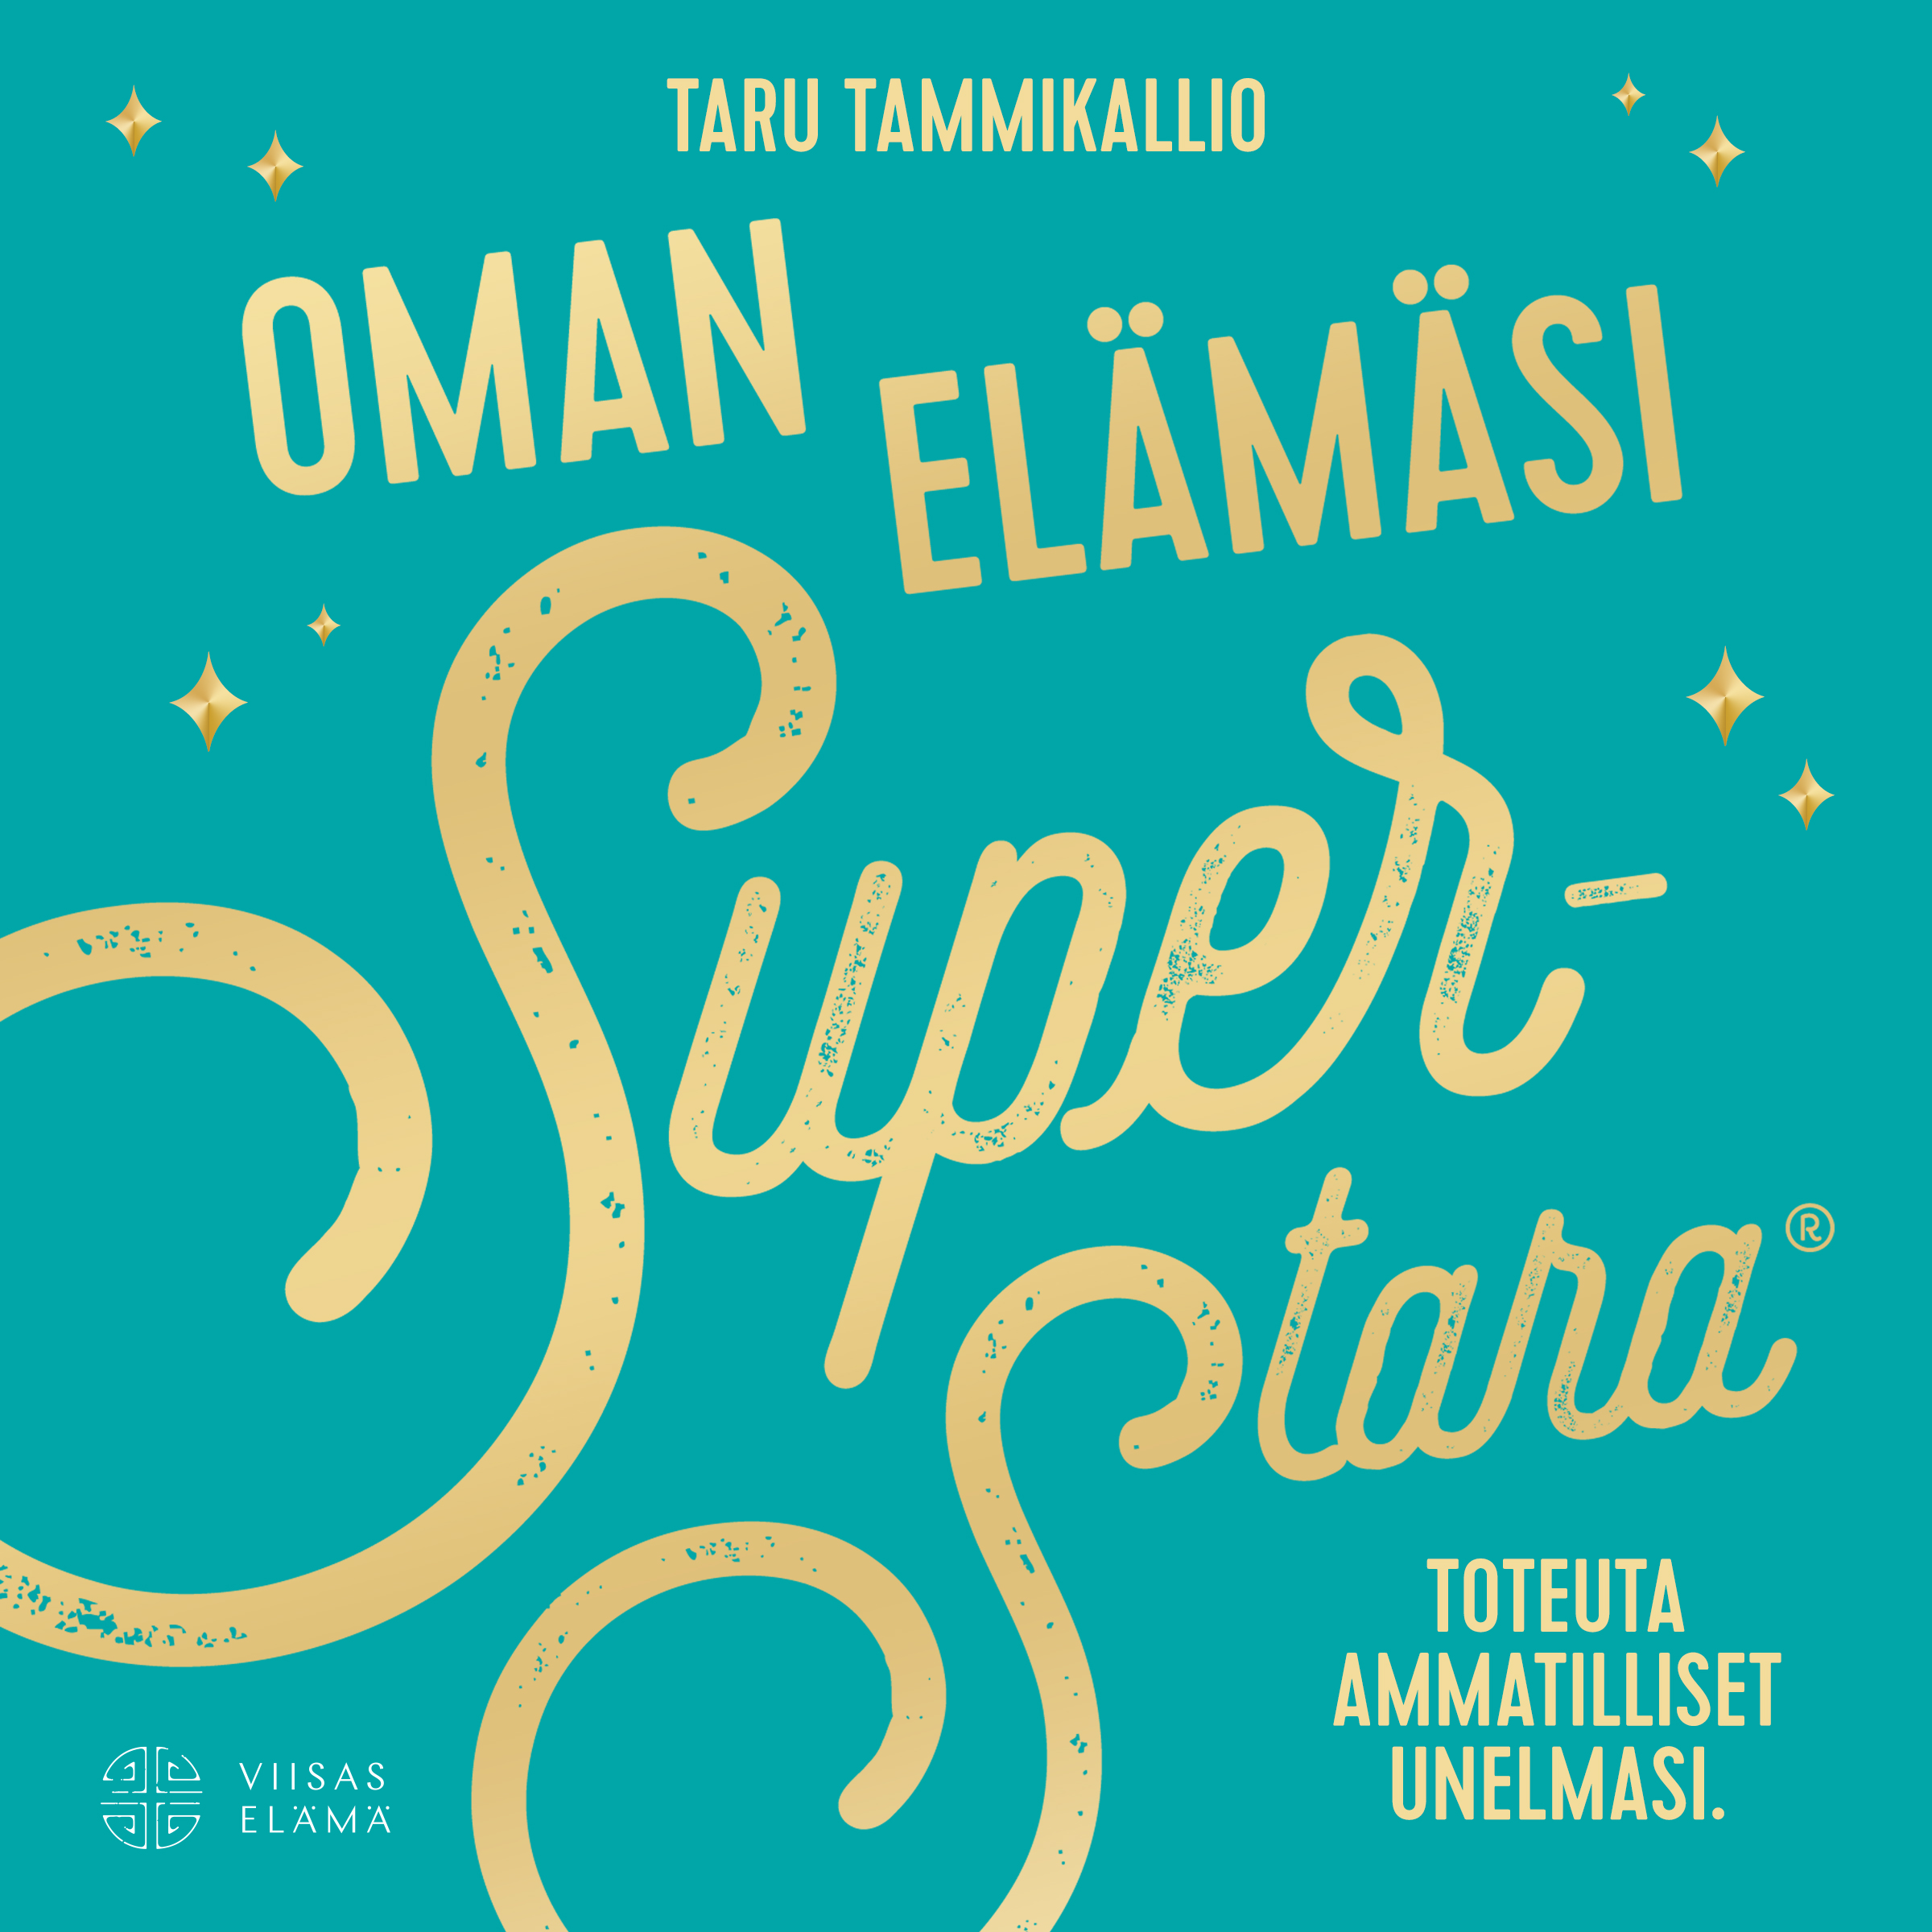 Tammikallio, Taru - Oman elämäsi superstara, audiobook